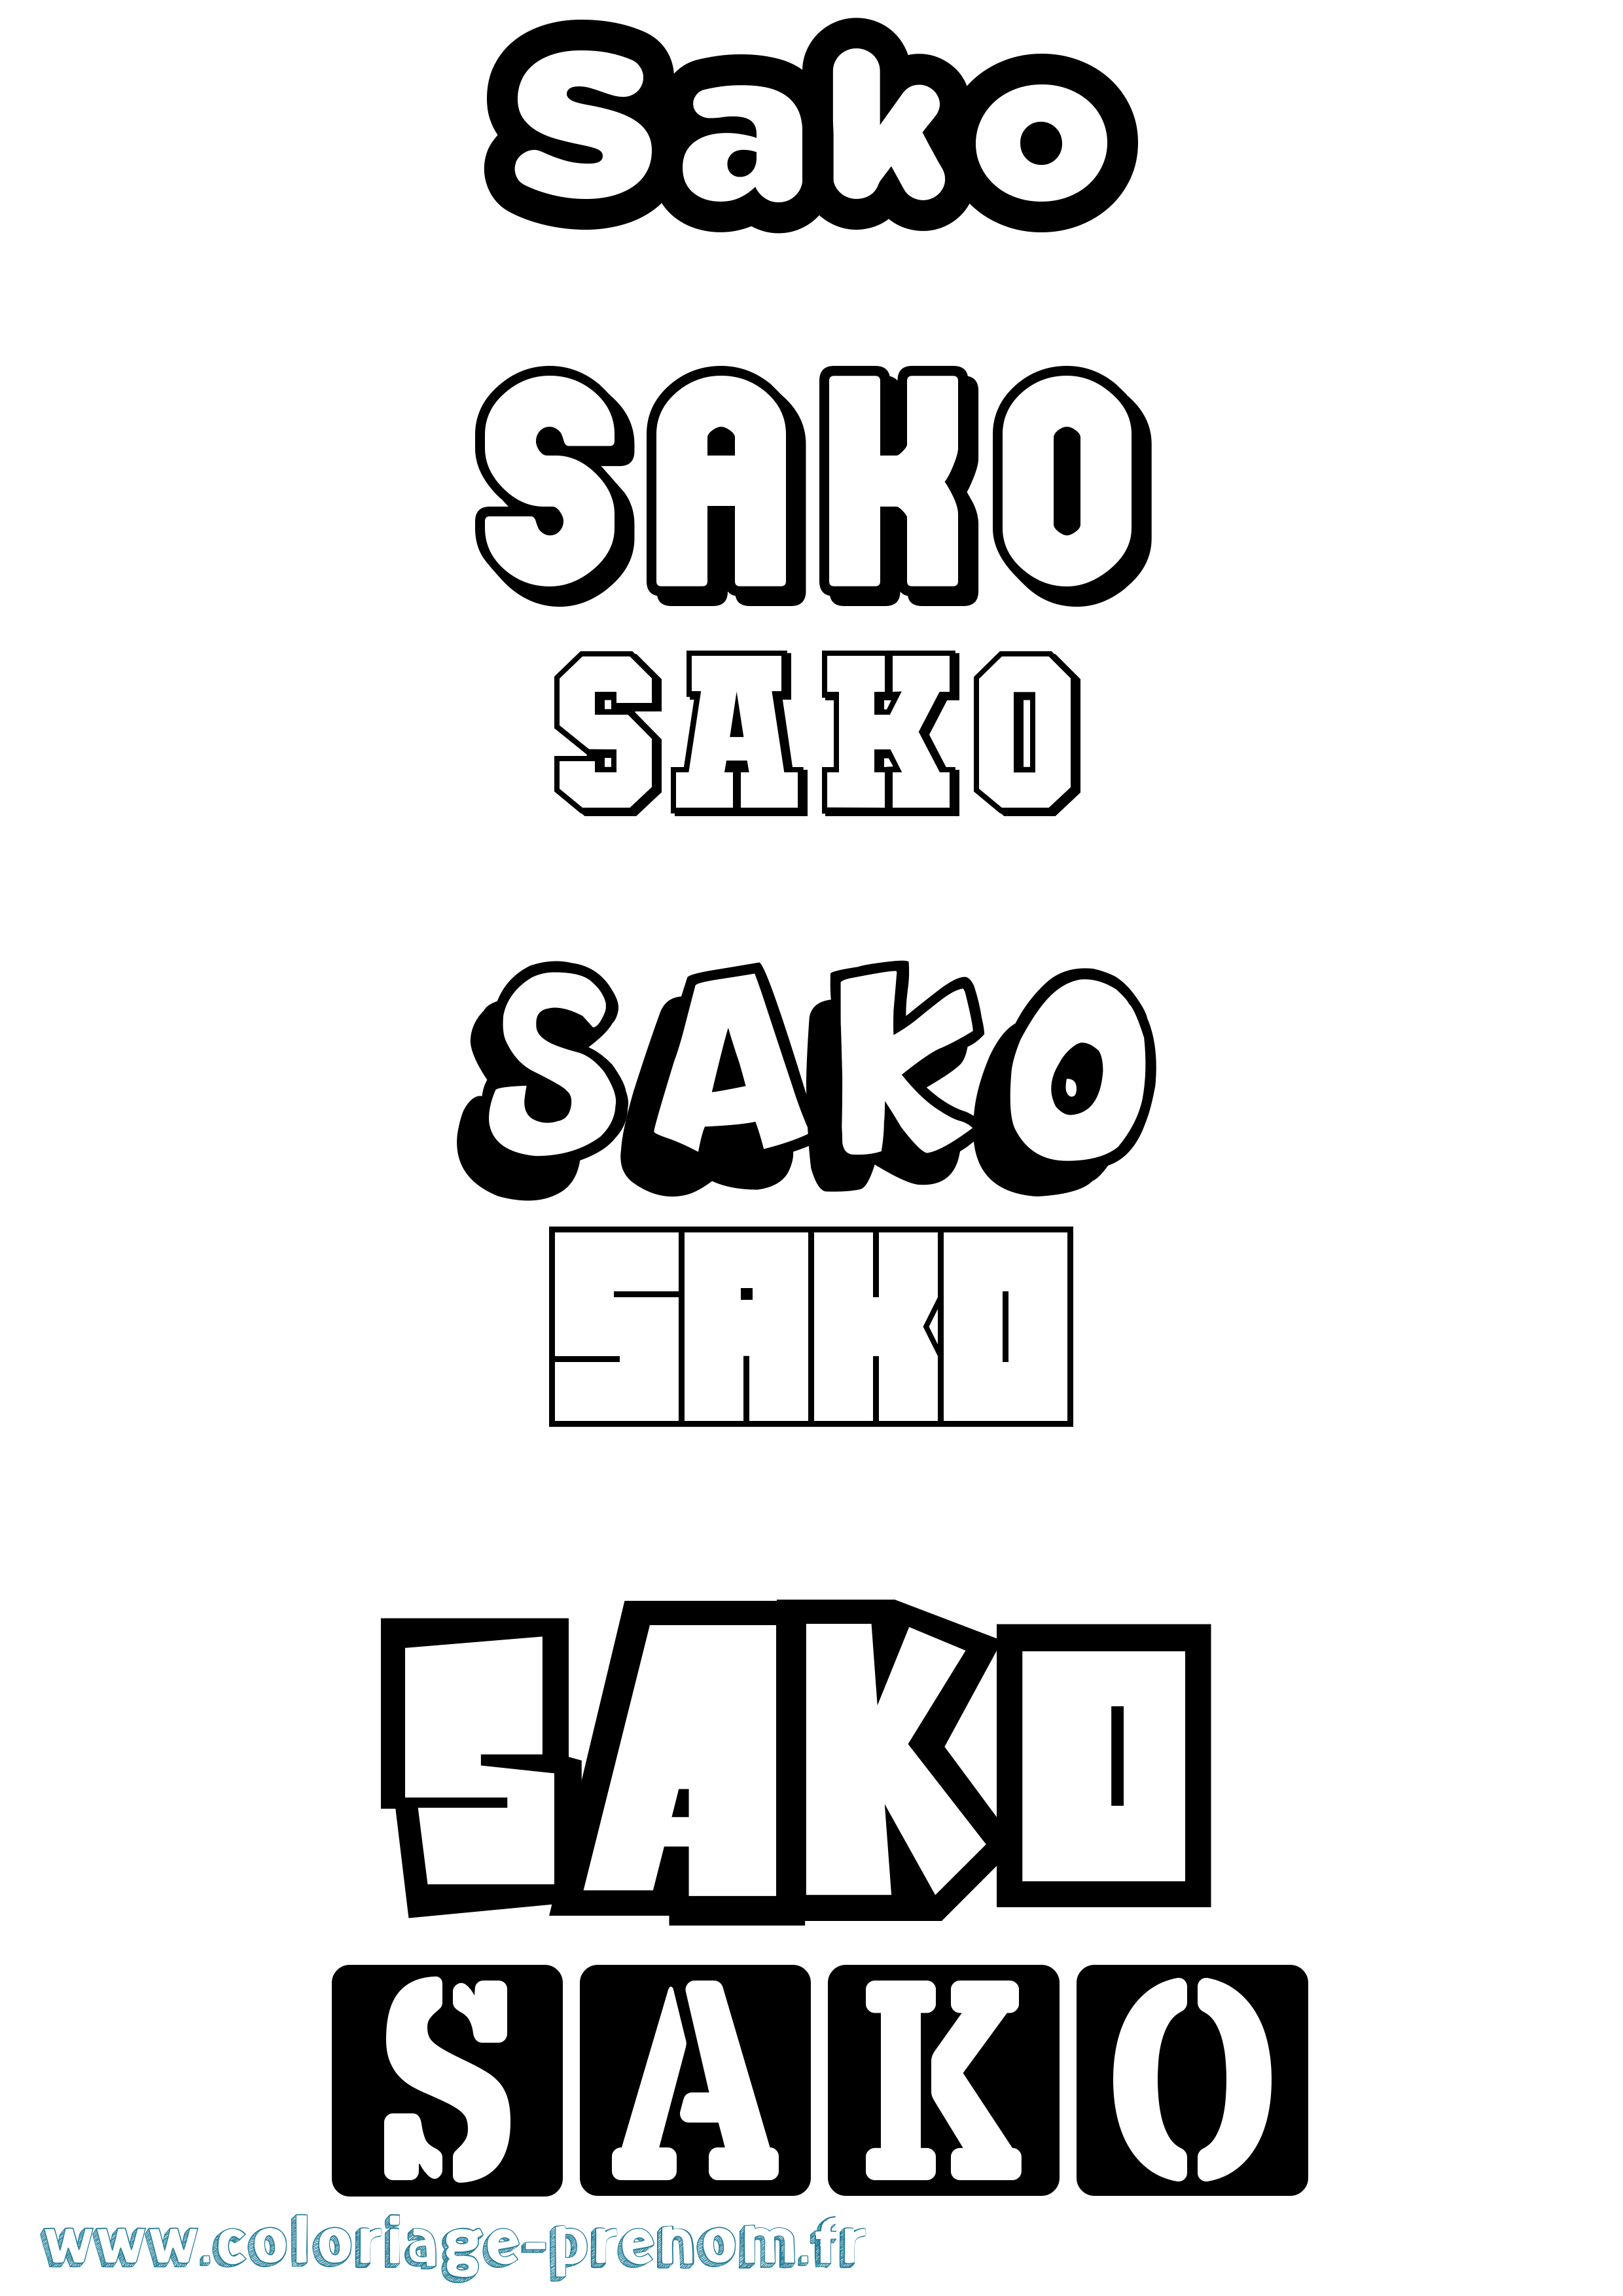 Coloriage prénom Sako Simple